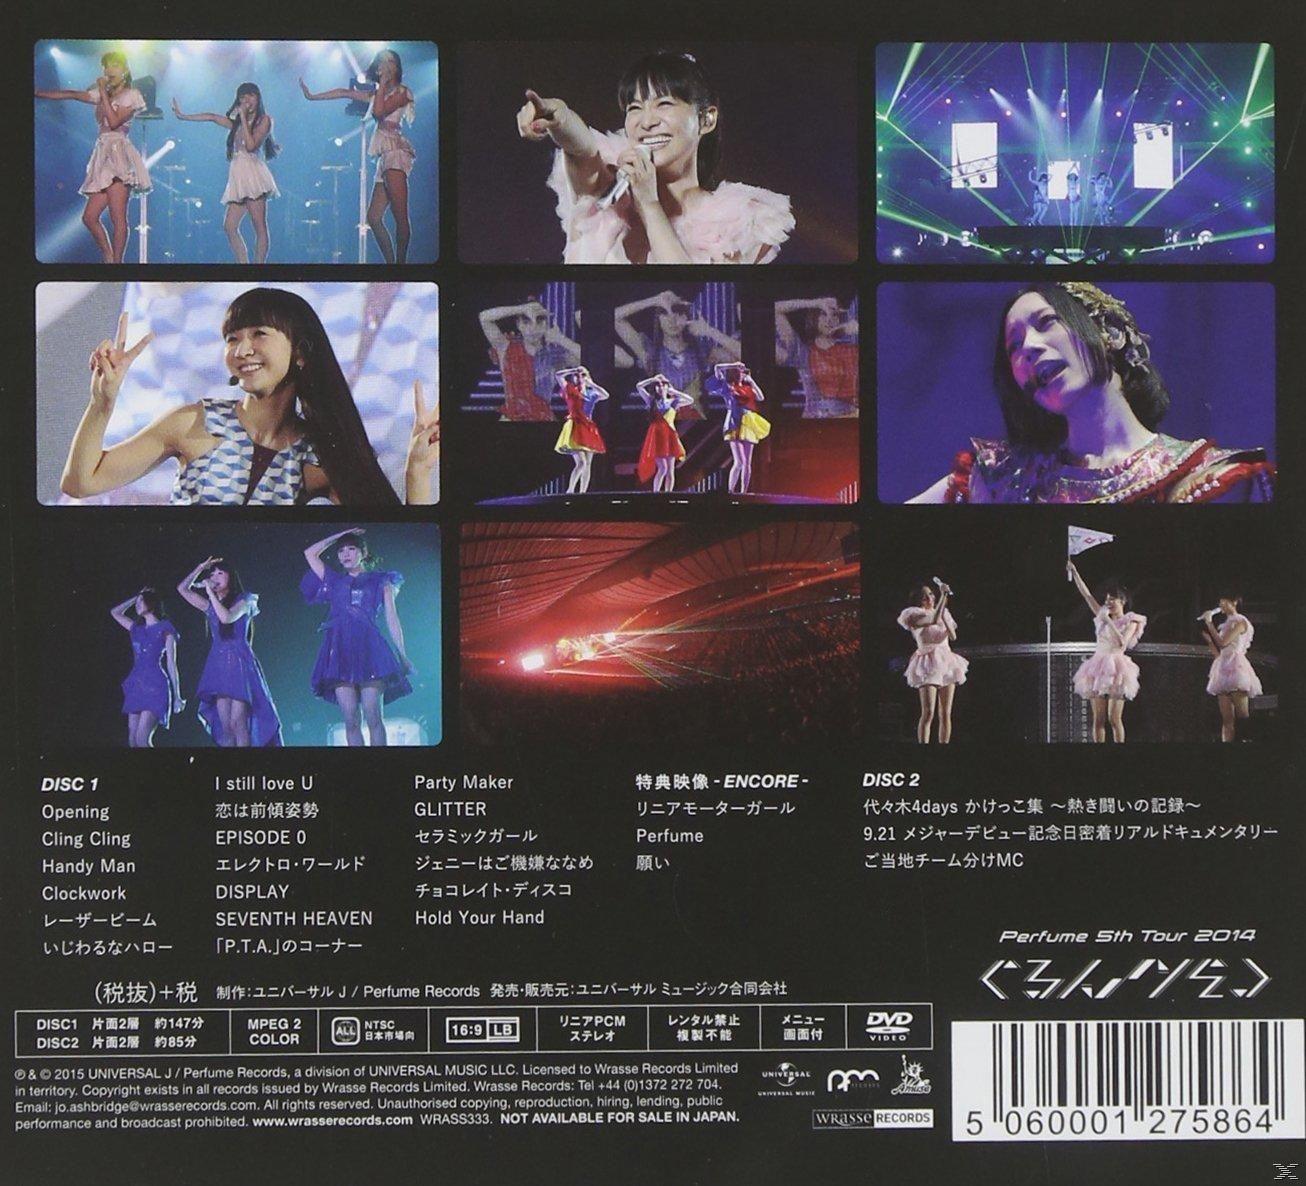 2014 + Perfume Tour 5th (LP - - Perfume Bonus-CD)